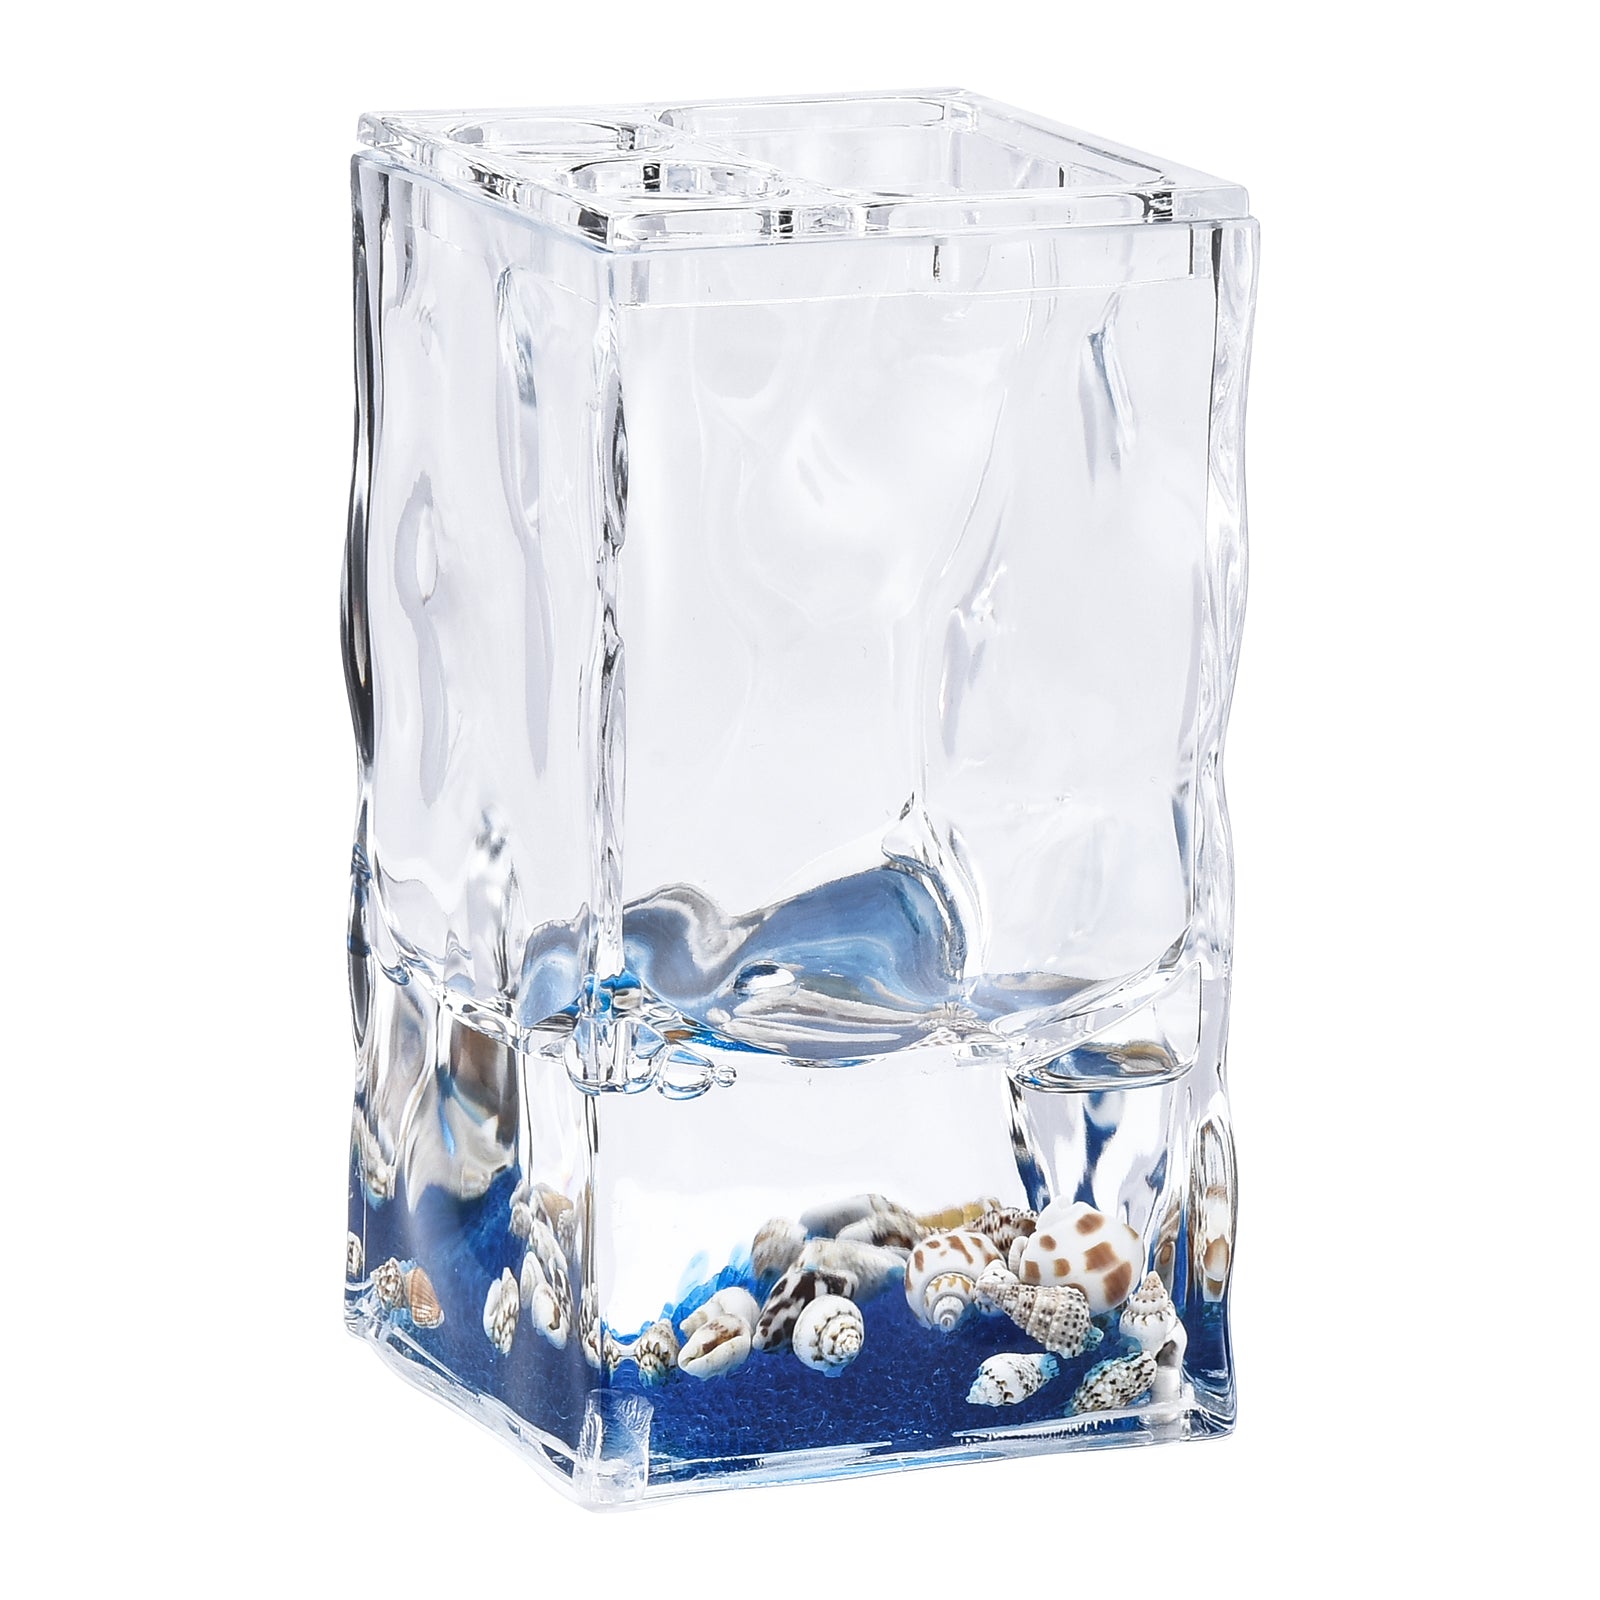 4 Piece Acrylic Liquid 3D Floating Motion Bathroom Vanity Accessory Set Shell